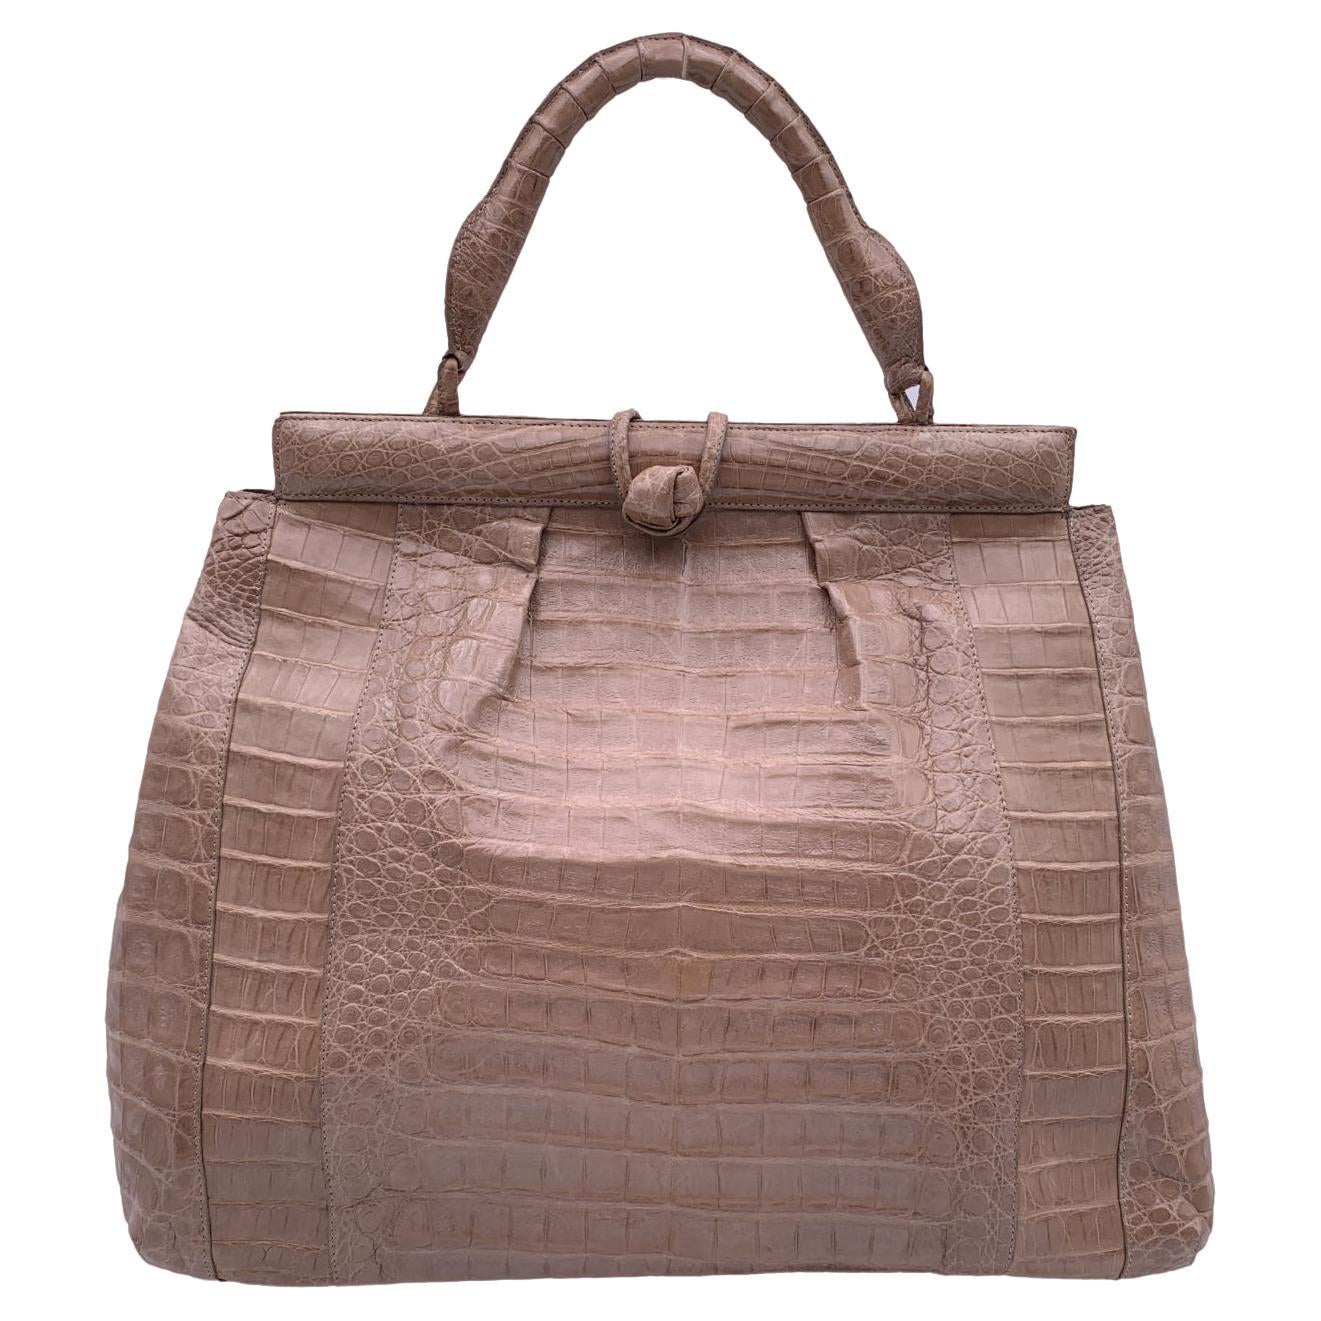 Nancy Gonzales Taupe Leather Satchel Handbag Top Handle Bag For Sale